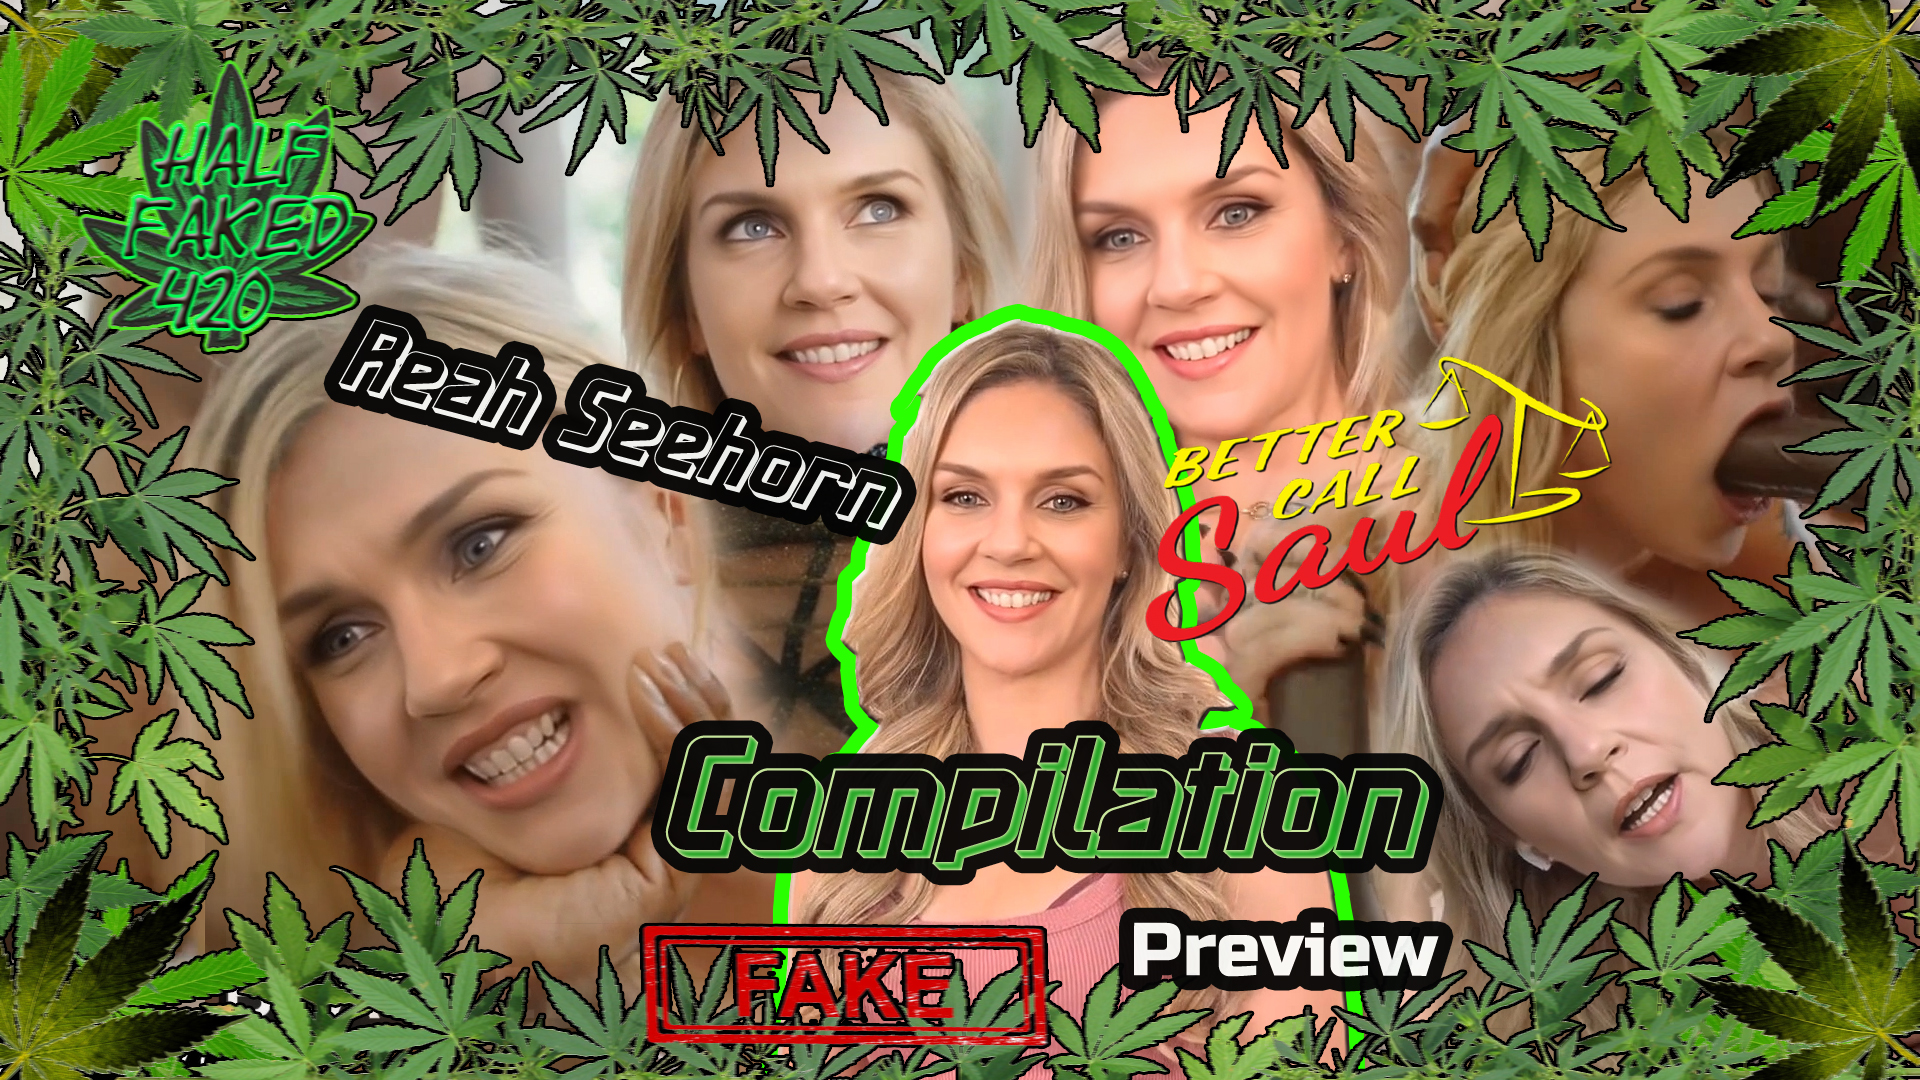 Rhea Seehorn (Kim Wexler) - Compilation | PREVIEW (36:37) | FAKE